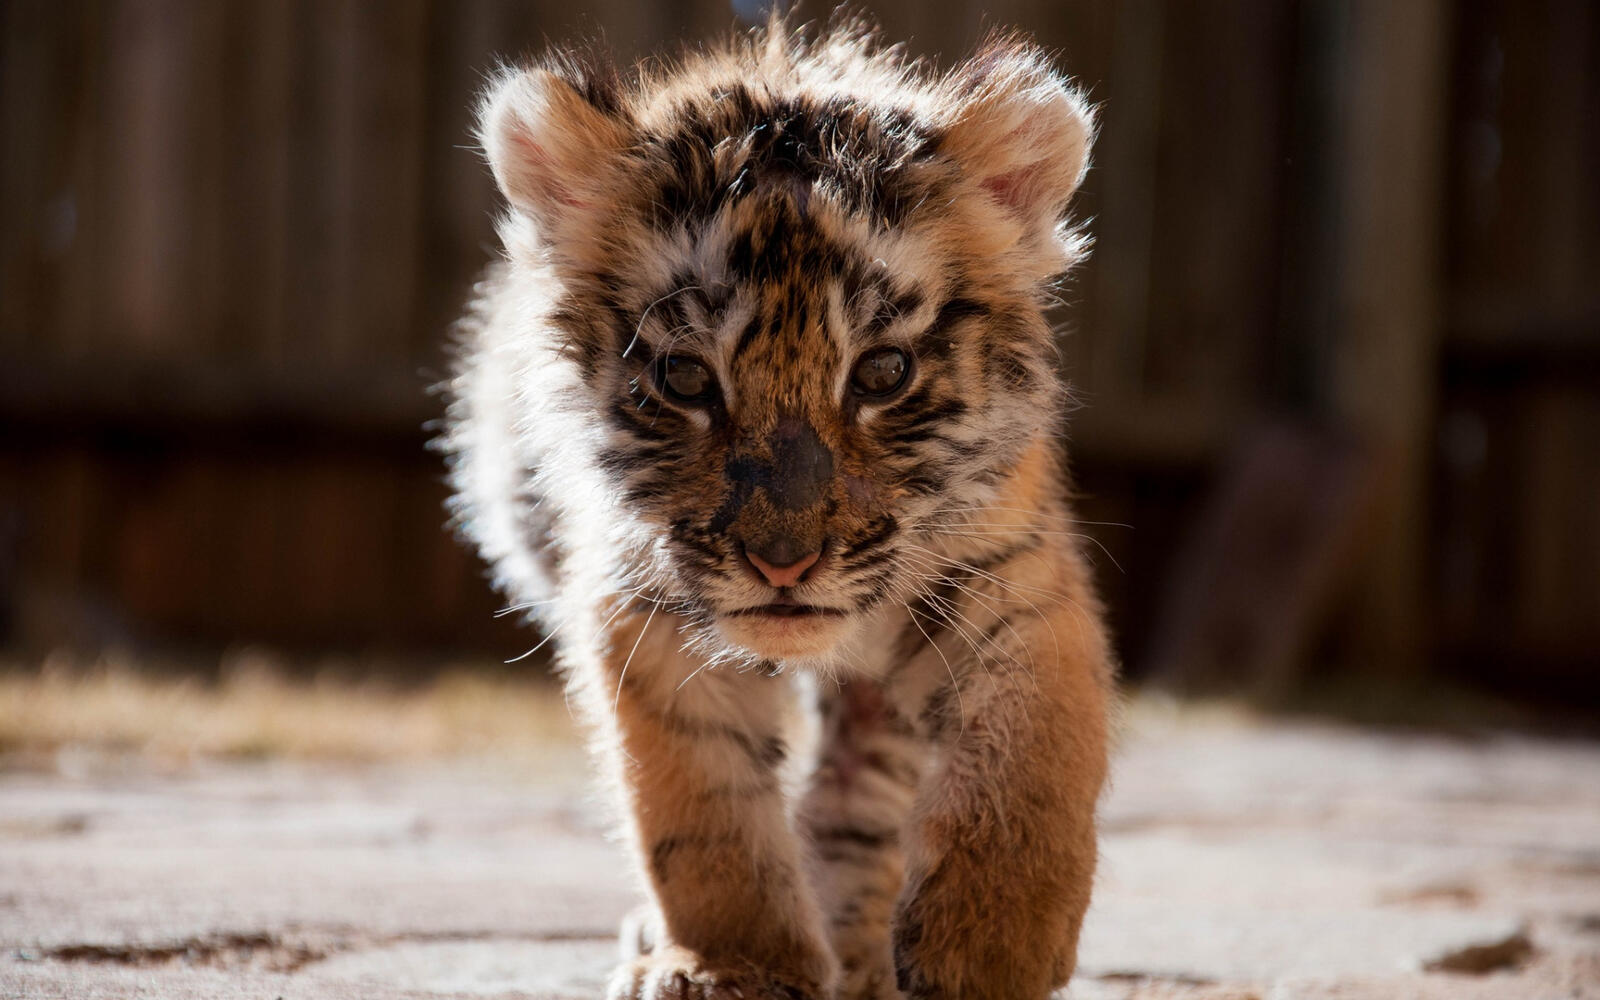 Wallpapers tiger cub kitten predator on the desktop